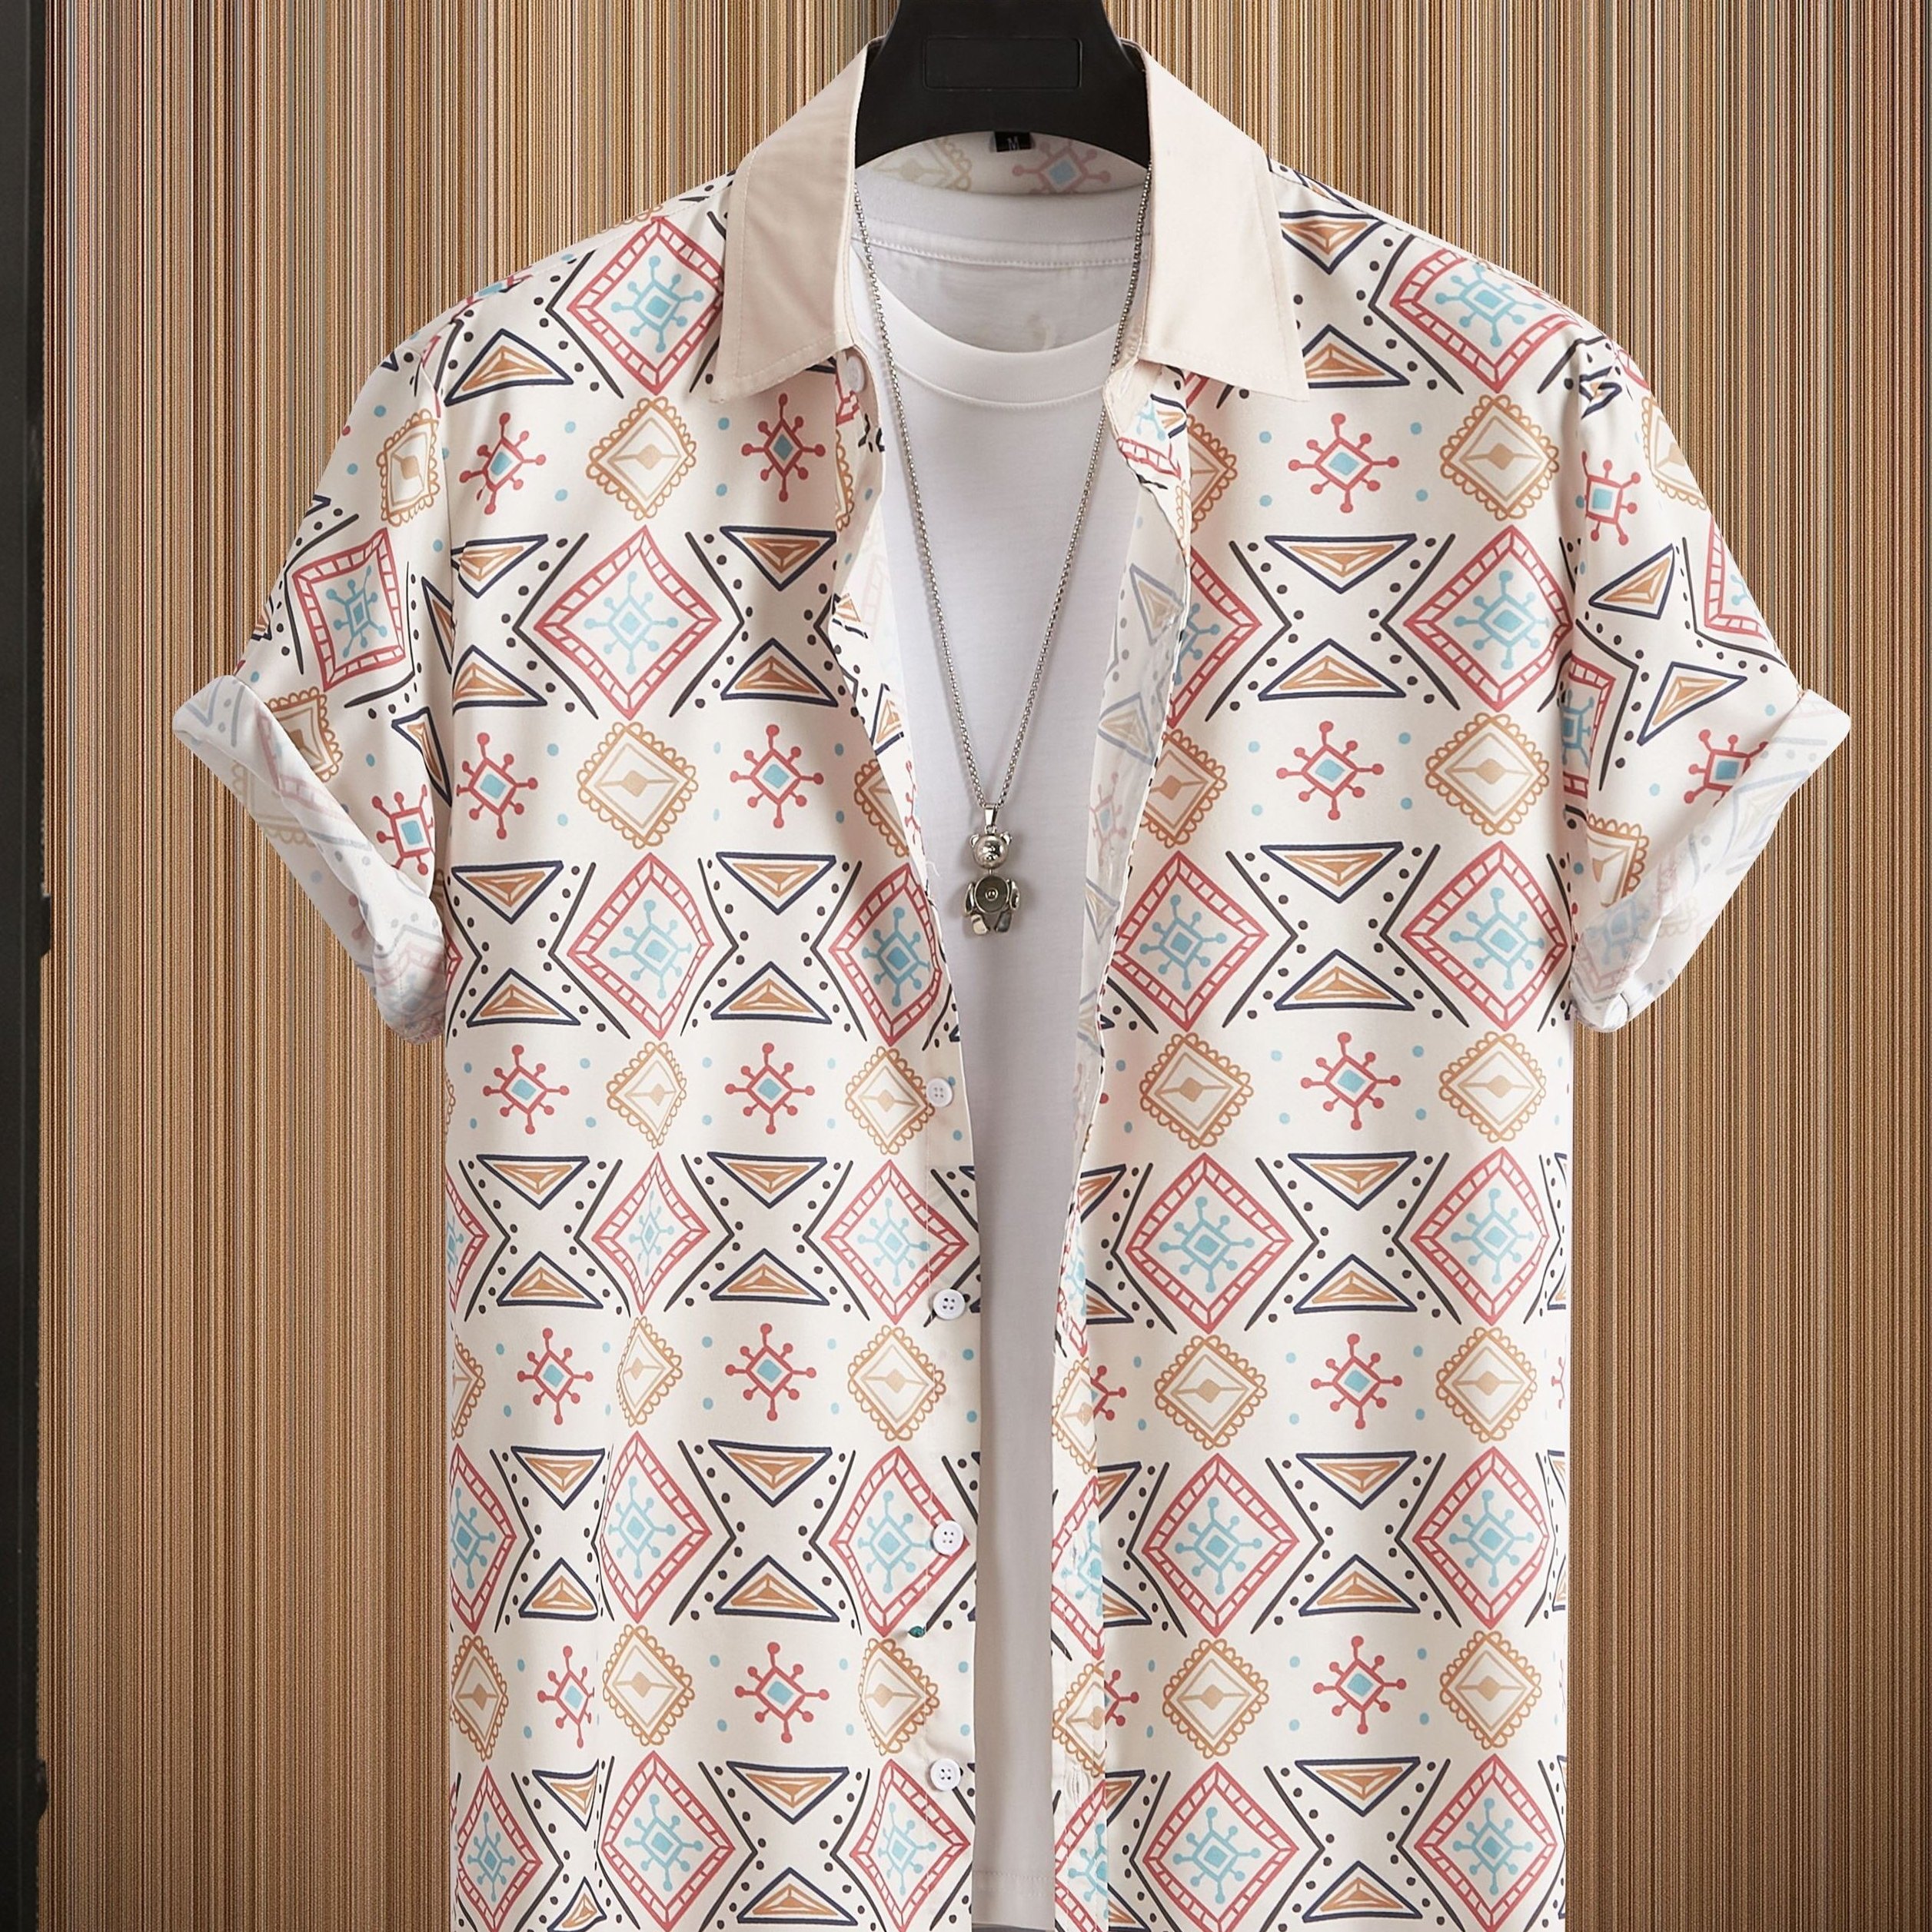 

Retro Boho Men's Short Sleeve Lapel Shirt, Men's Casual Printed Button Up Tops For Summer Vacation